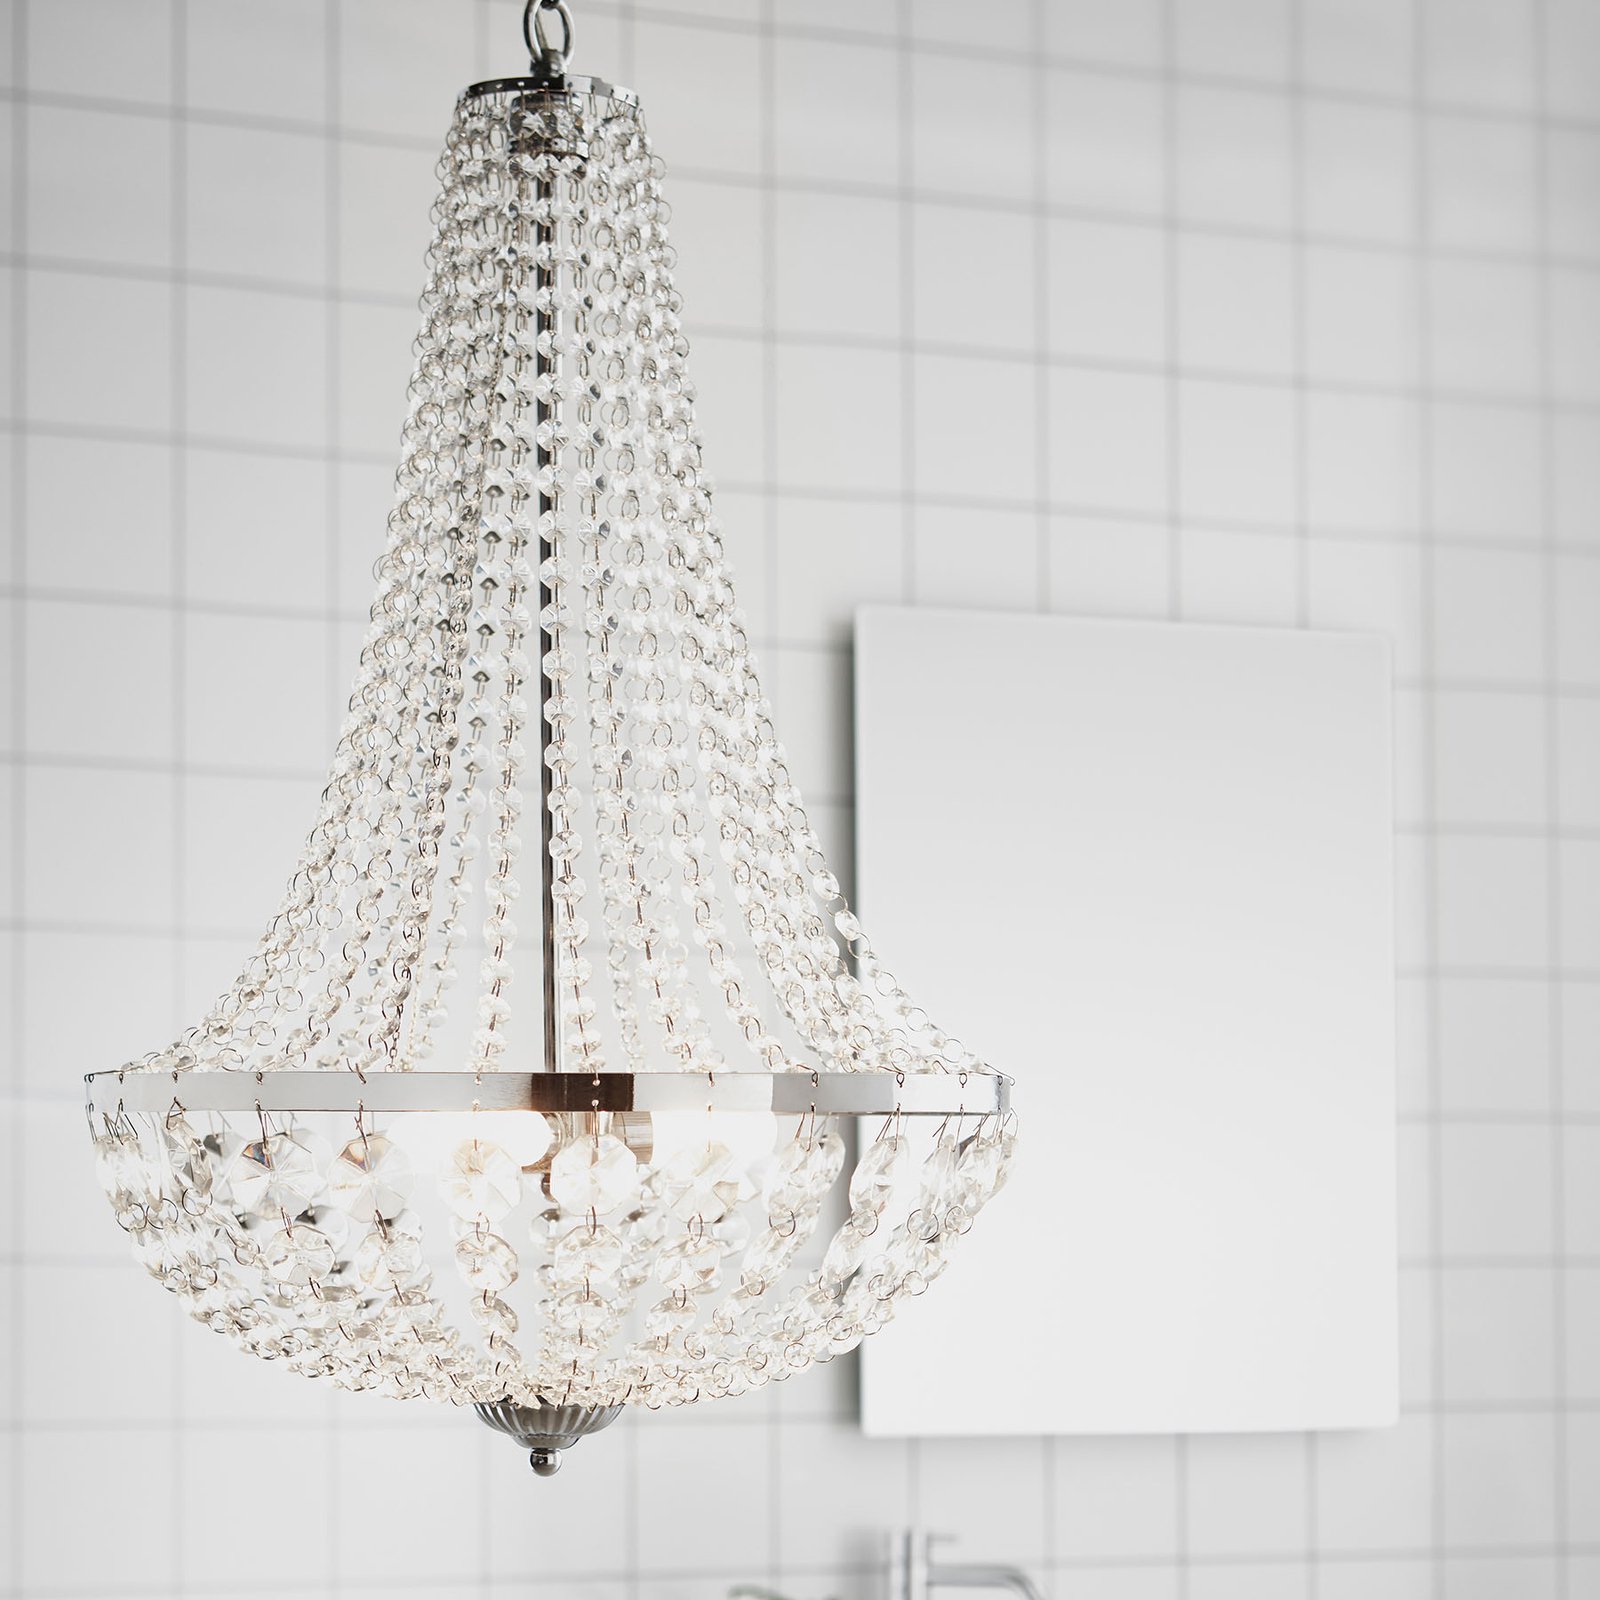 Gransö chandelier for the bathroom, Ø 40 cm